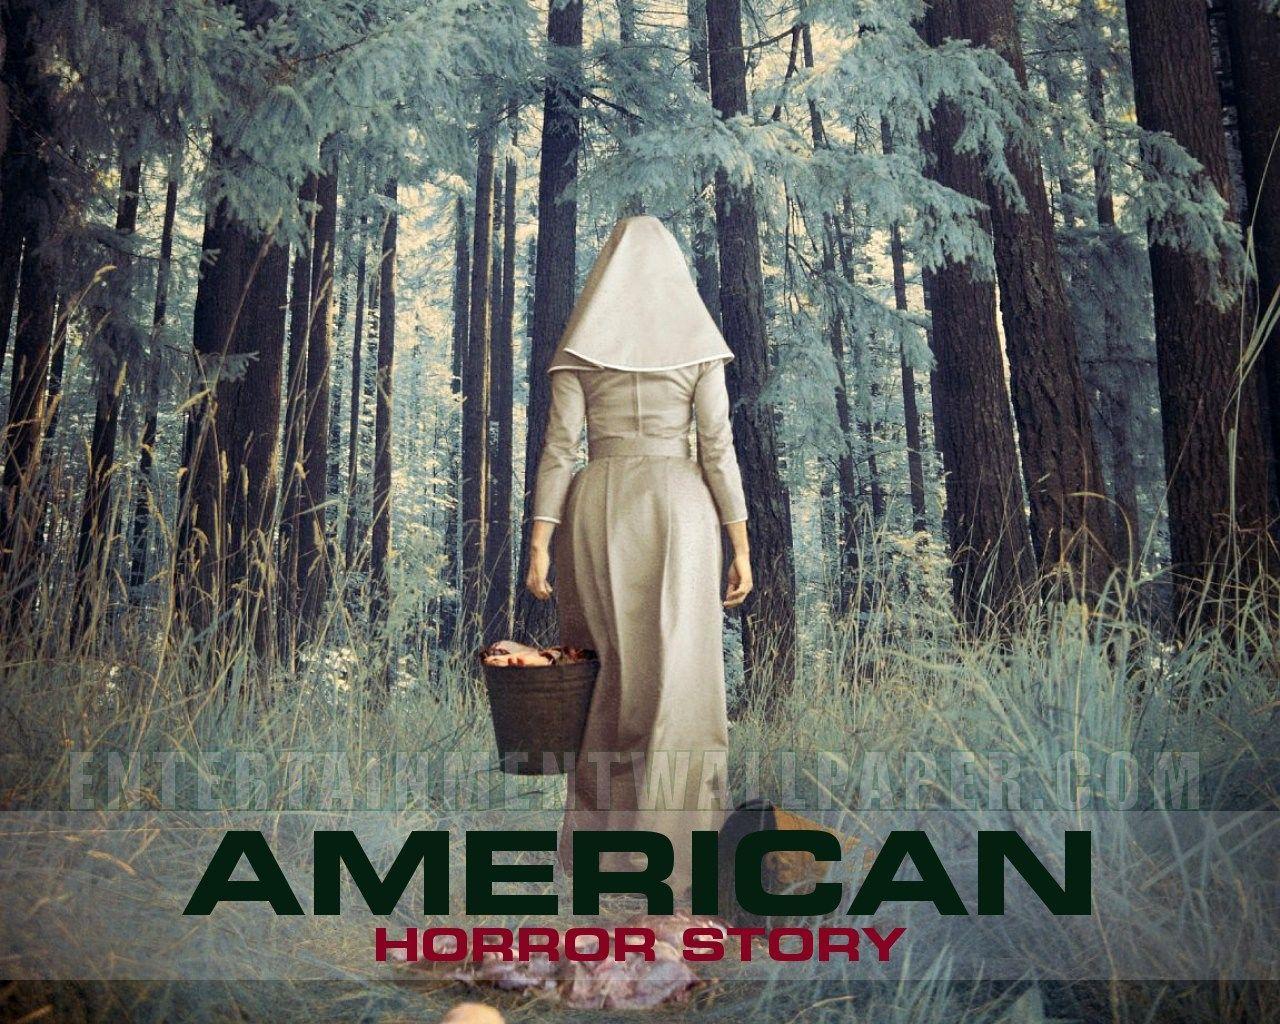 American Horror Story Season 2: The Asylum Horror Story